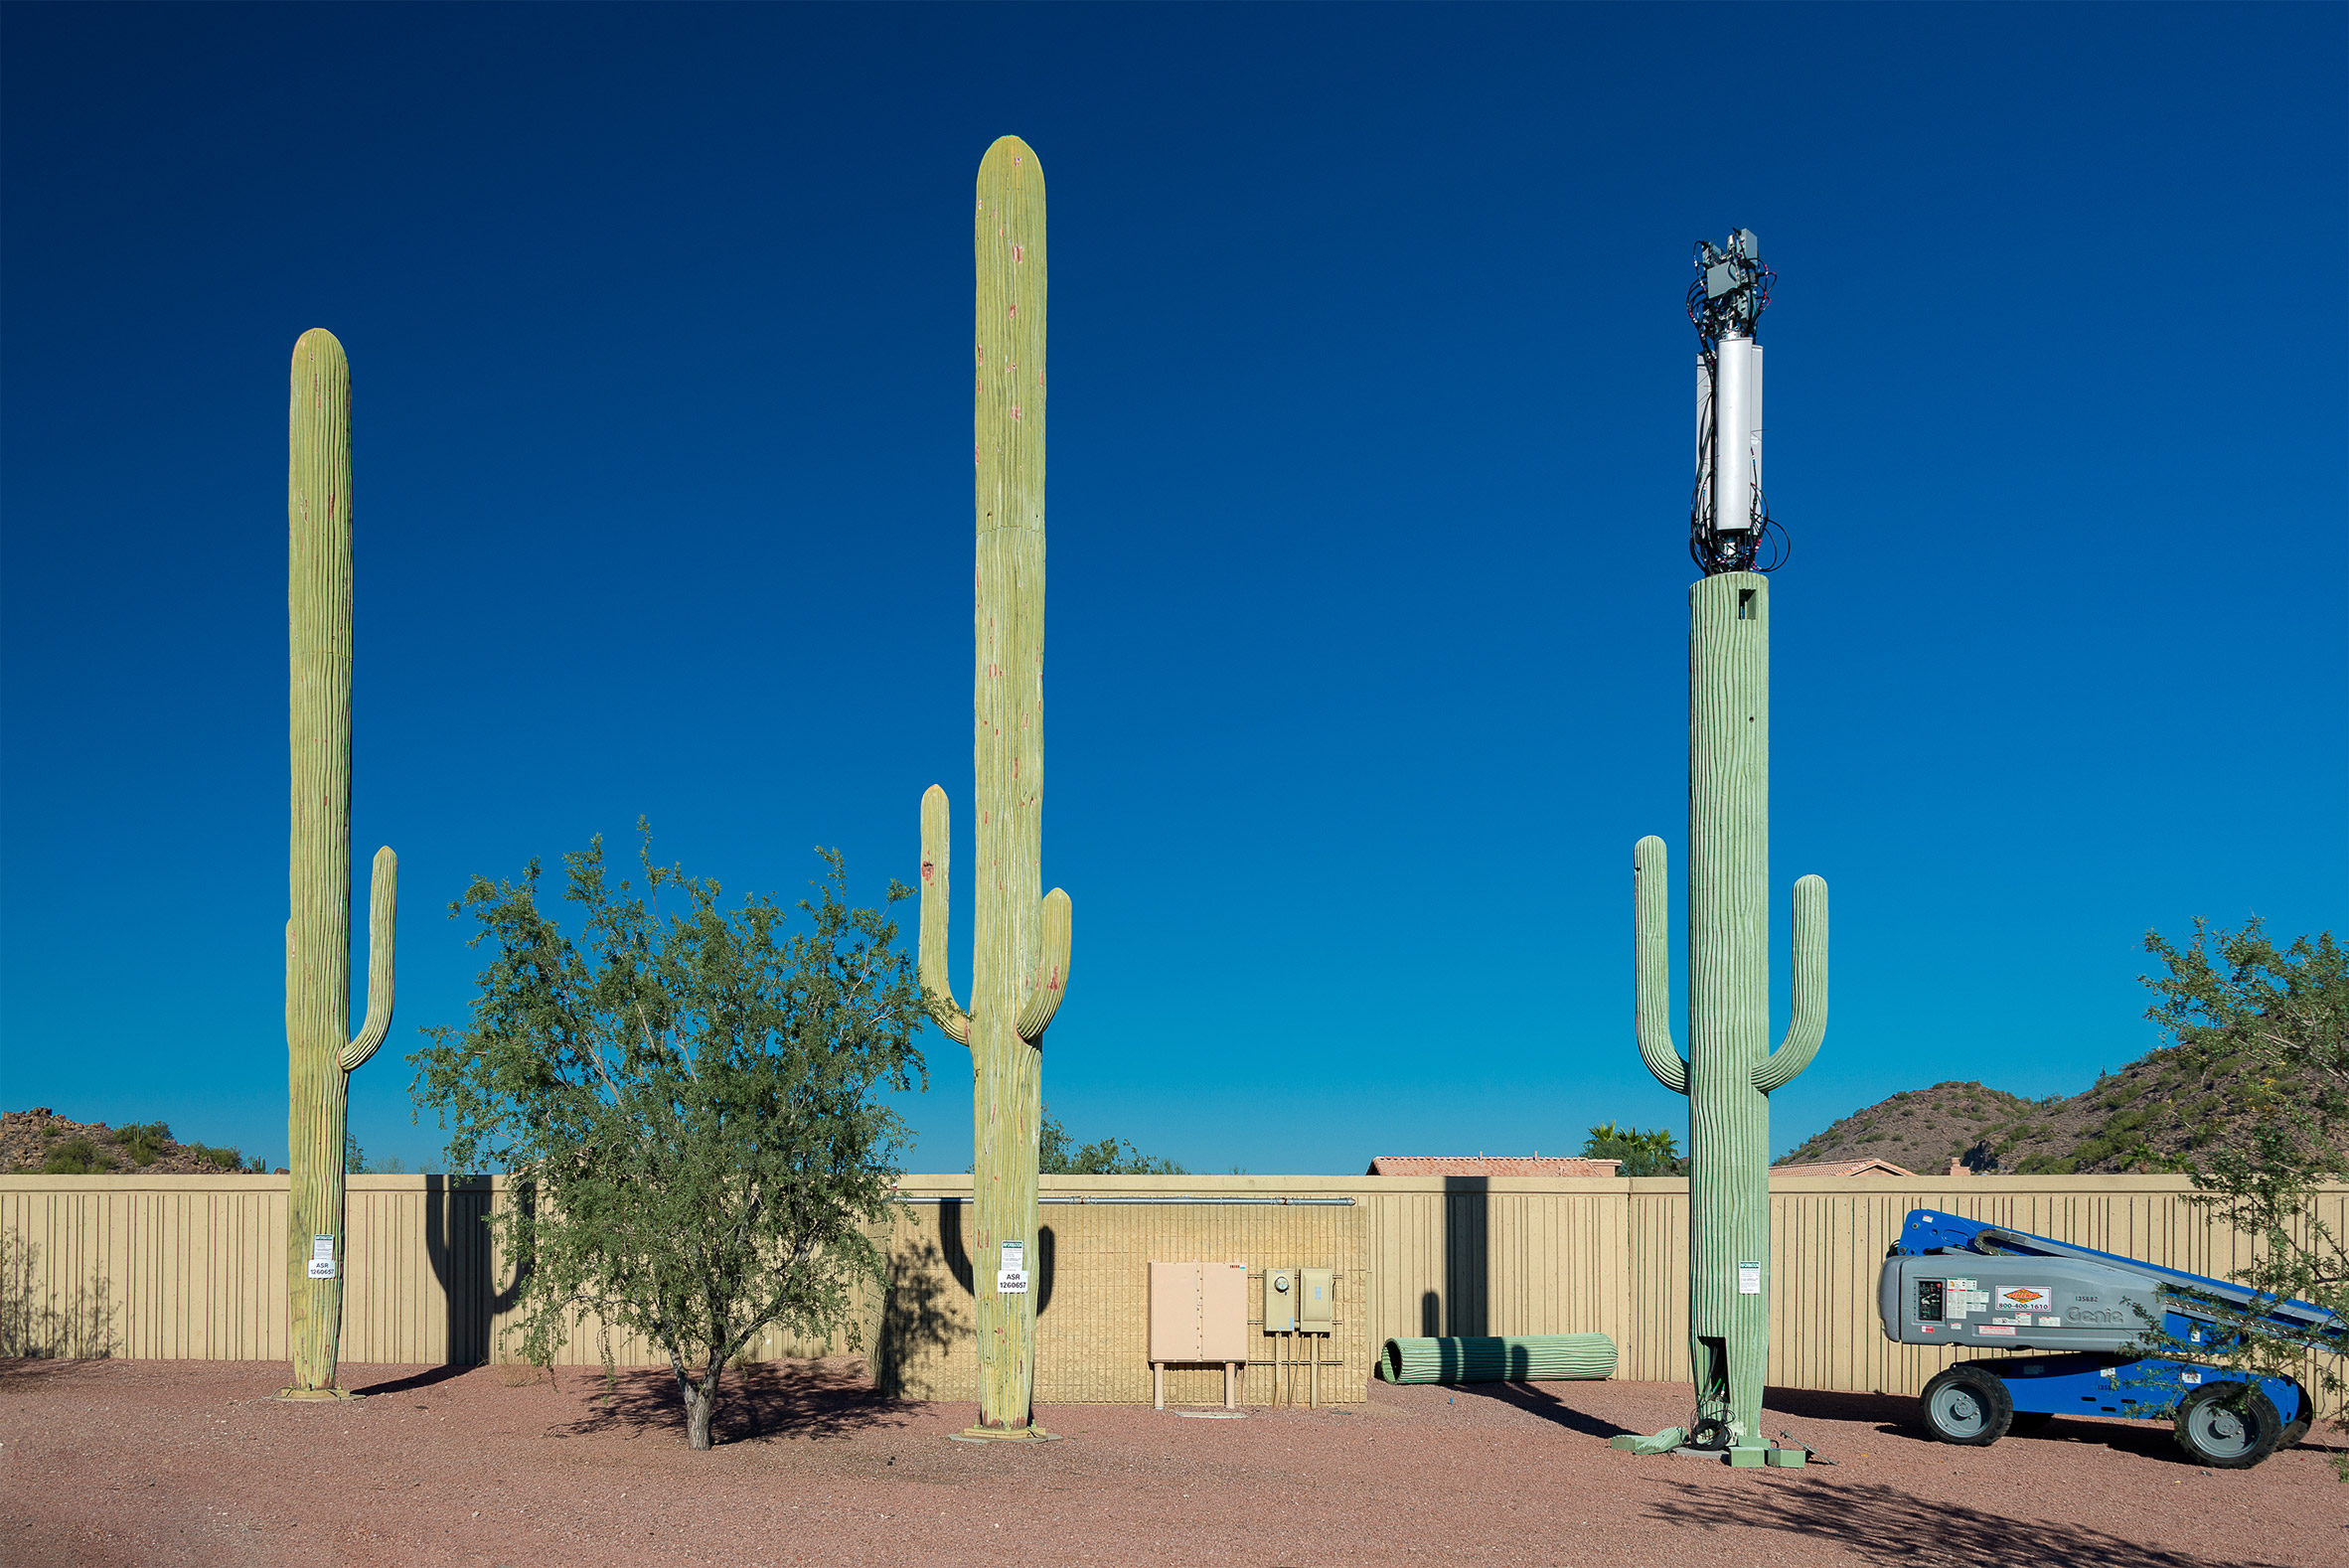 Saguaro cacti hiding cell towers